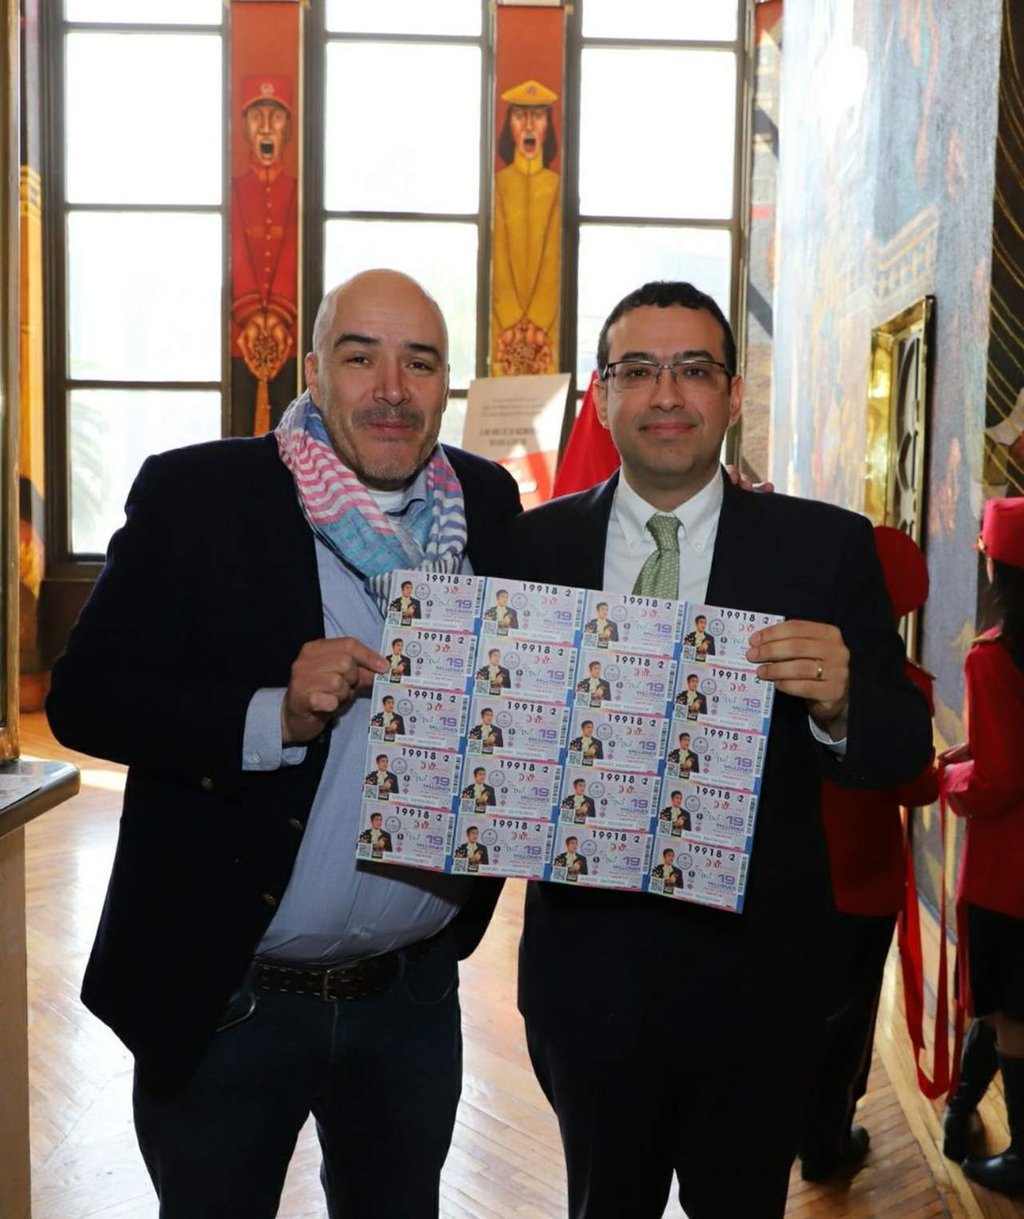 Recuerdan a Luis Aguilar con billete de lotería en centenario de natalicio